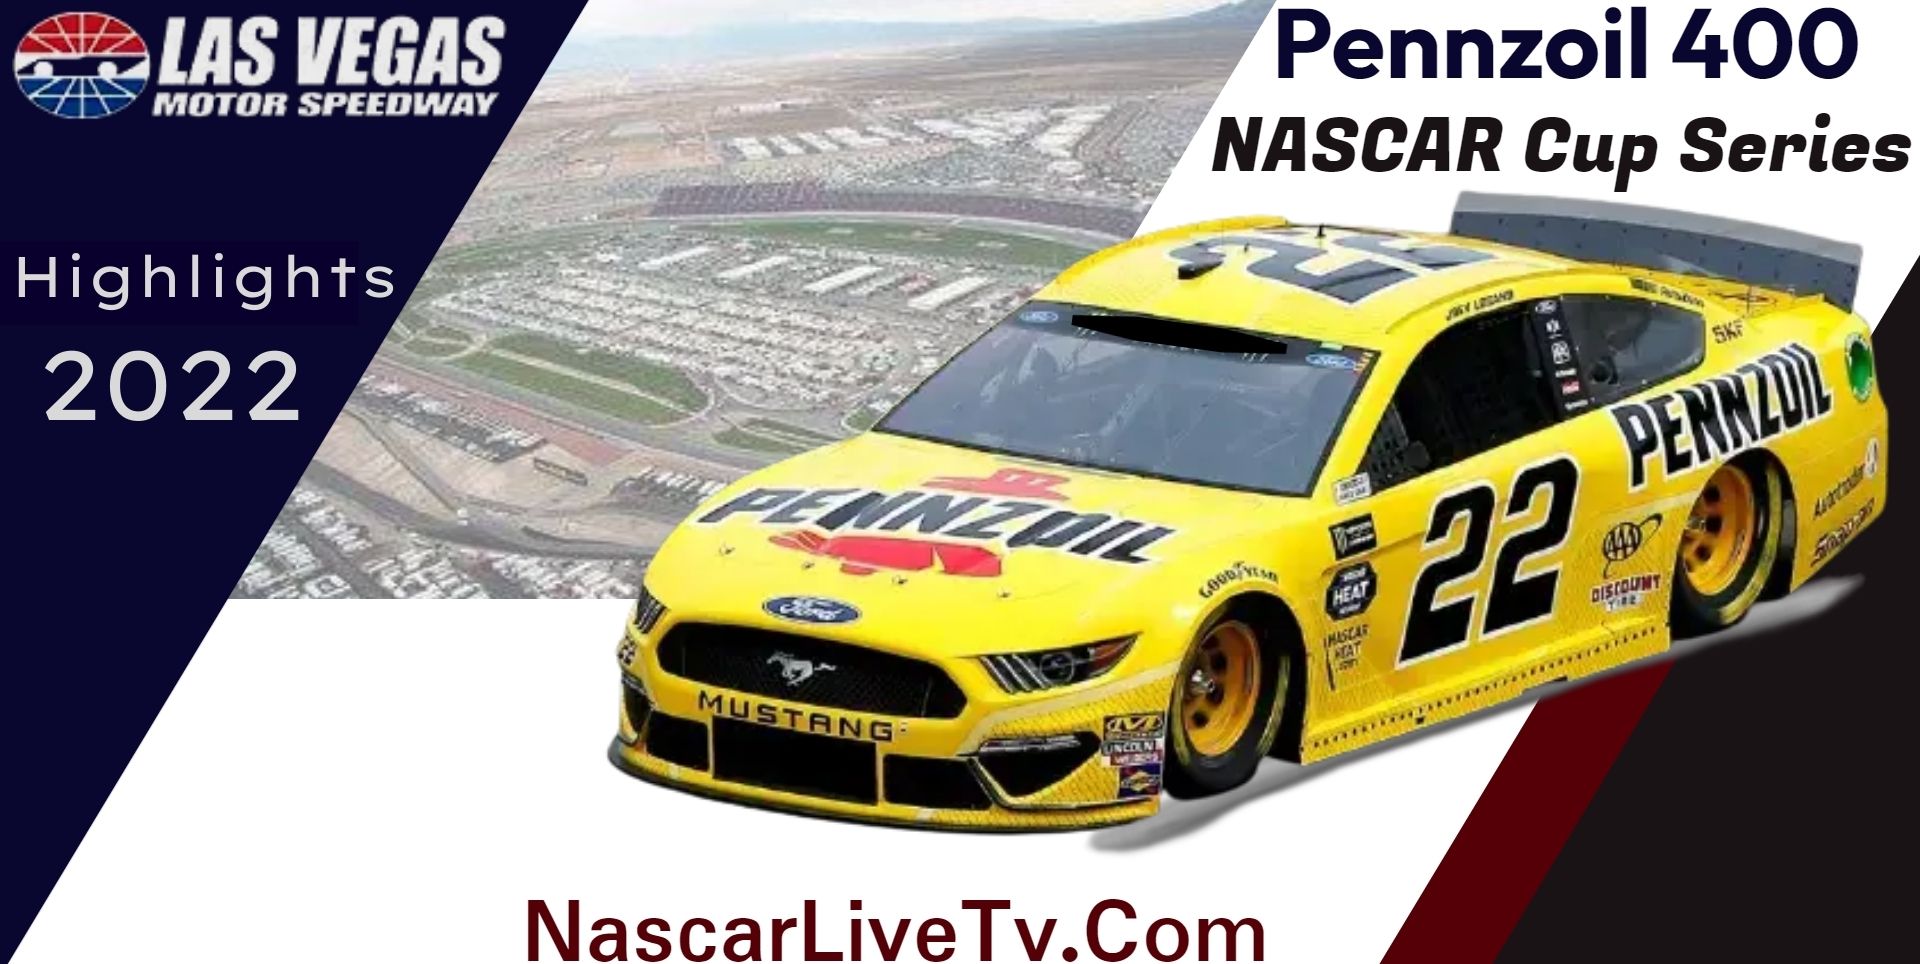 Pennzoil 400 Highlights NASCAR Cup Series 2022